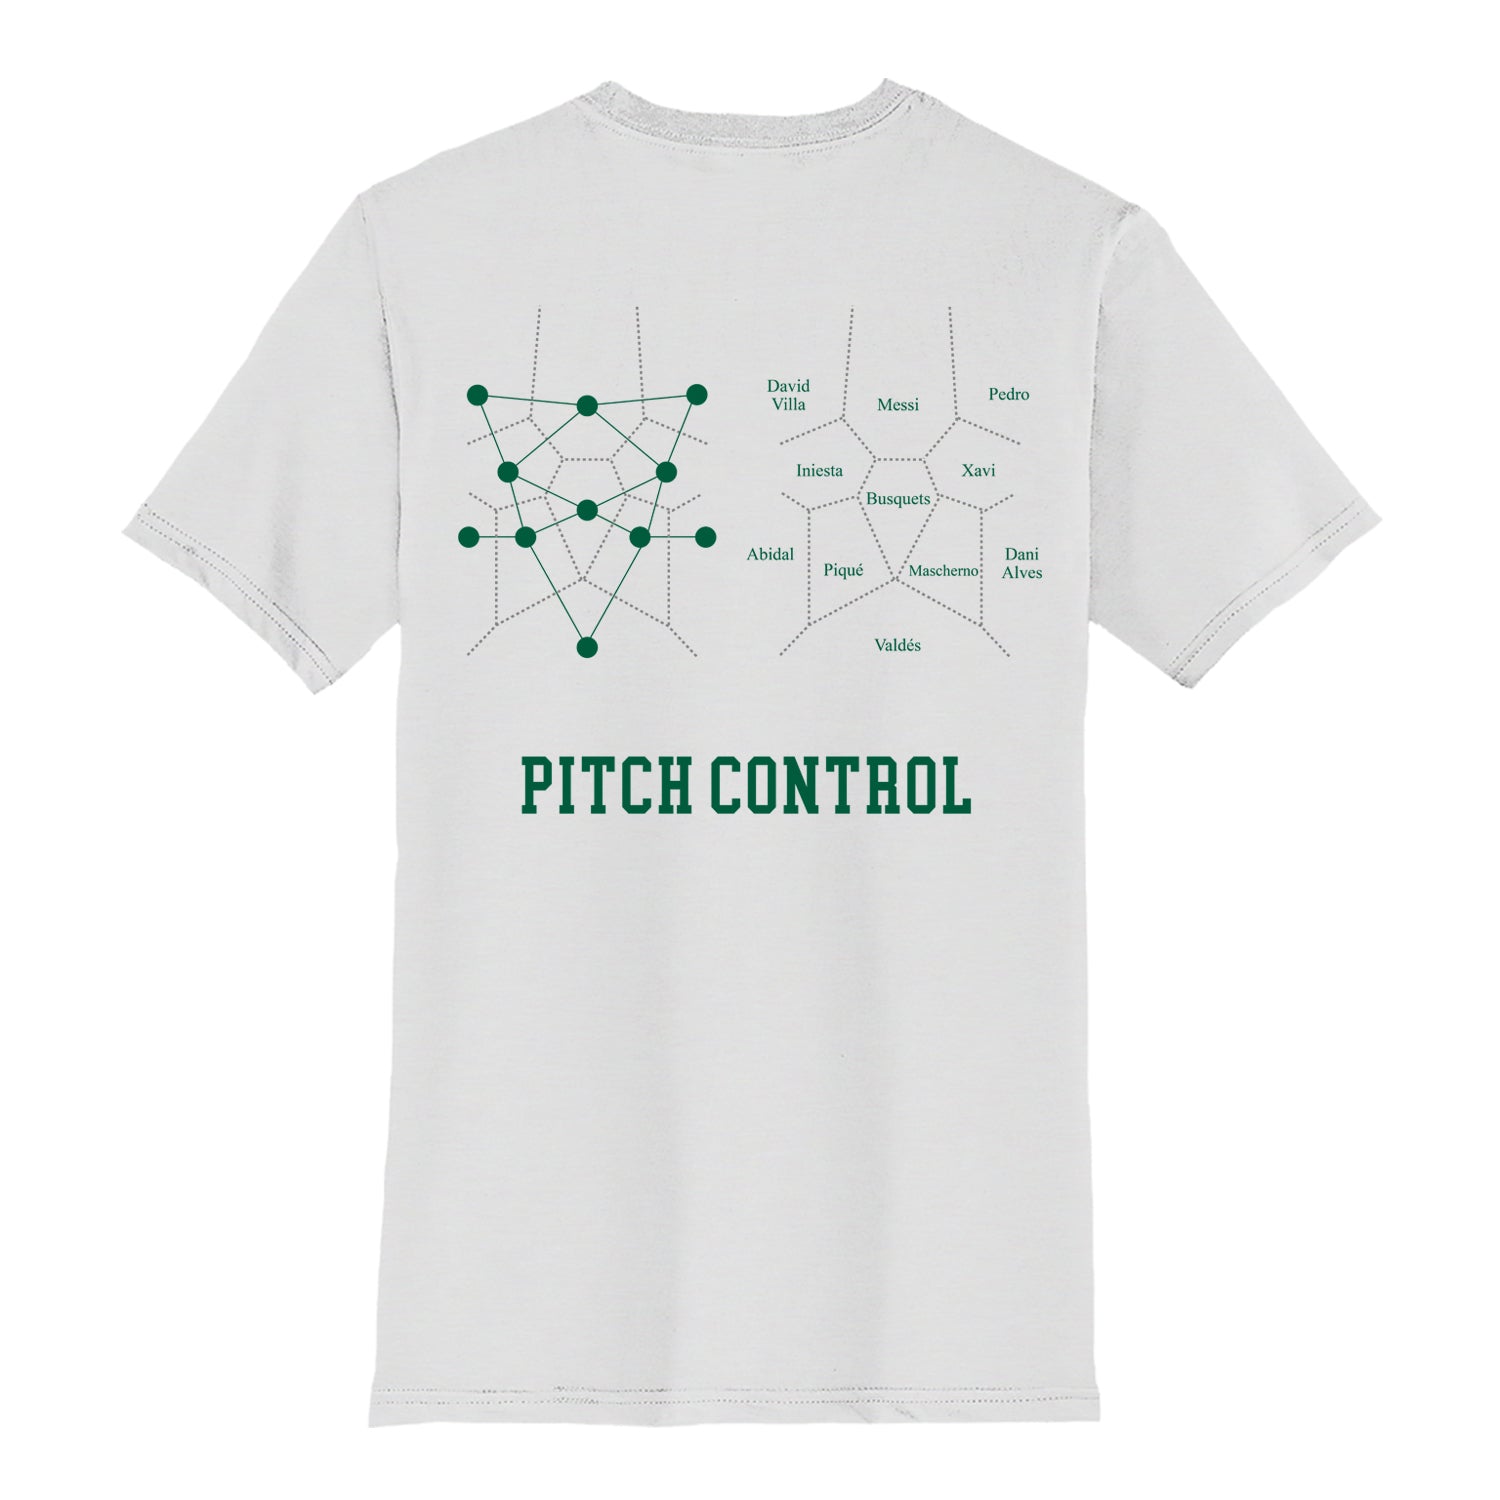 Pitch Control - Soccermatics - Tee